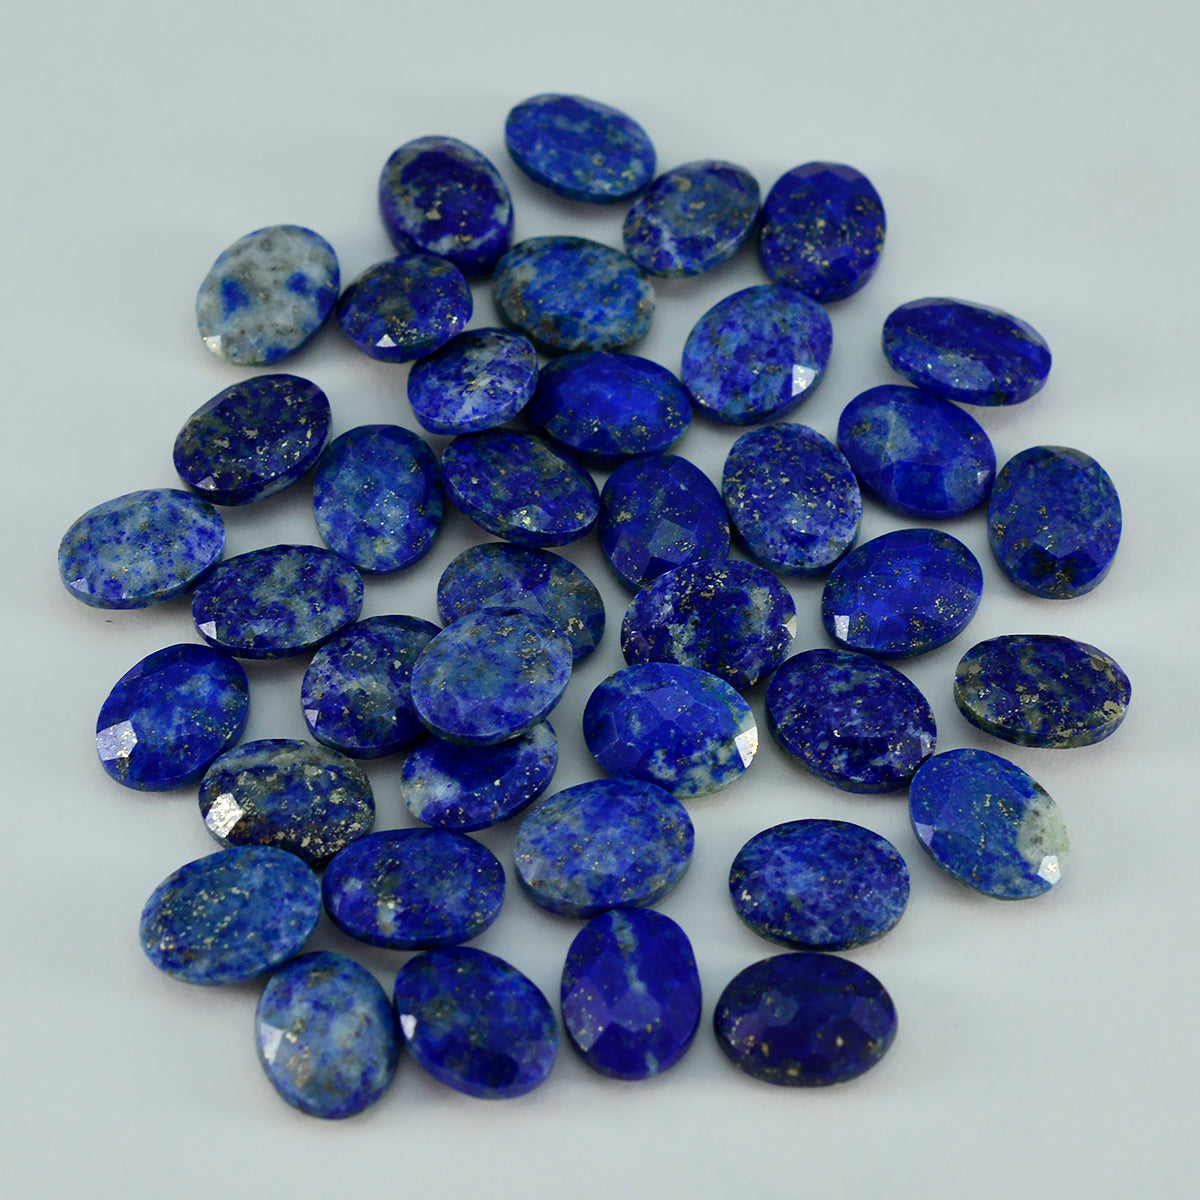 Riyogems, 1 pieza, lapislázuli azul natural facetado, 8x10mm, forma ovalada, gema suelta de excelente calidad